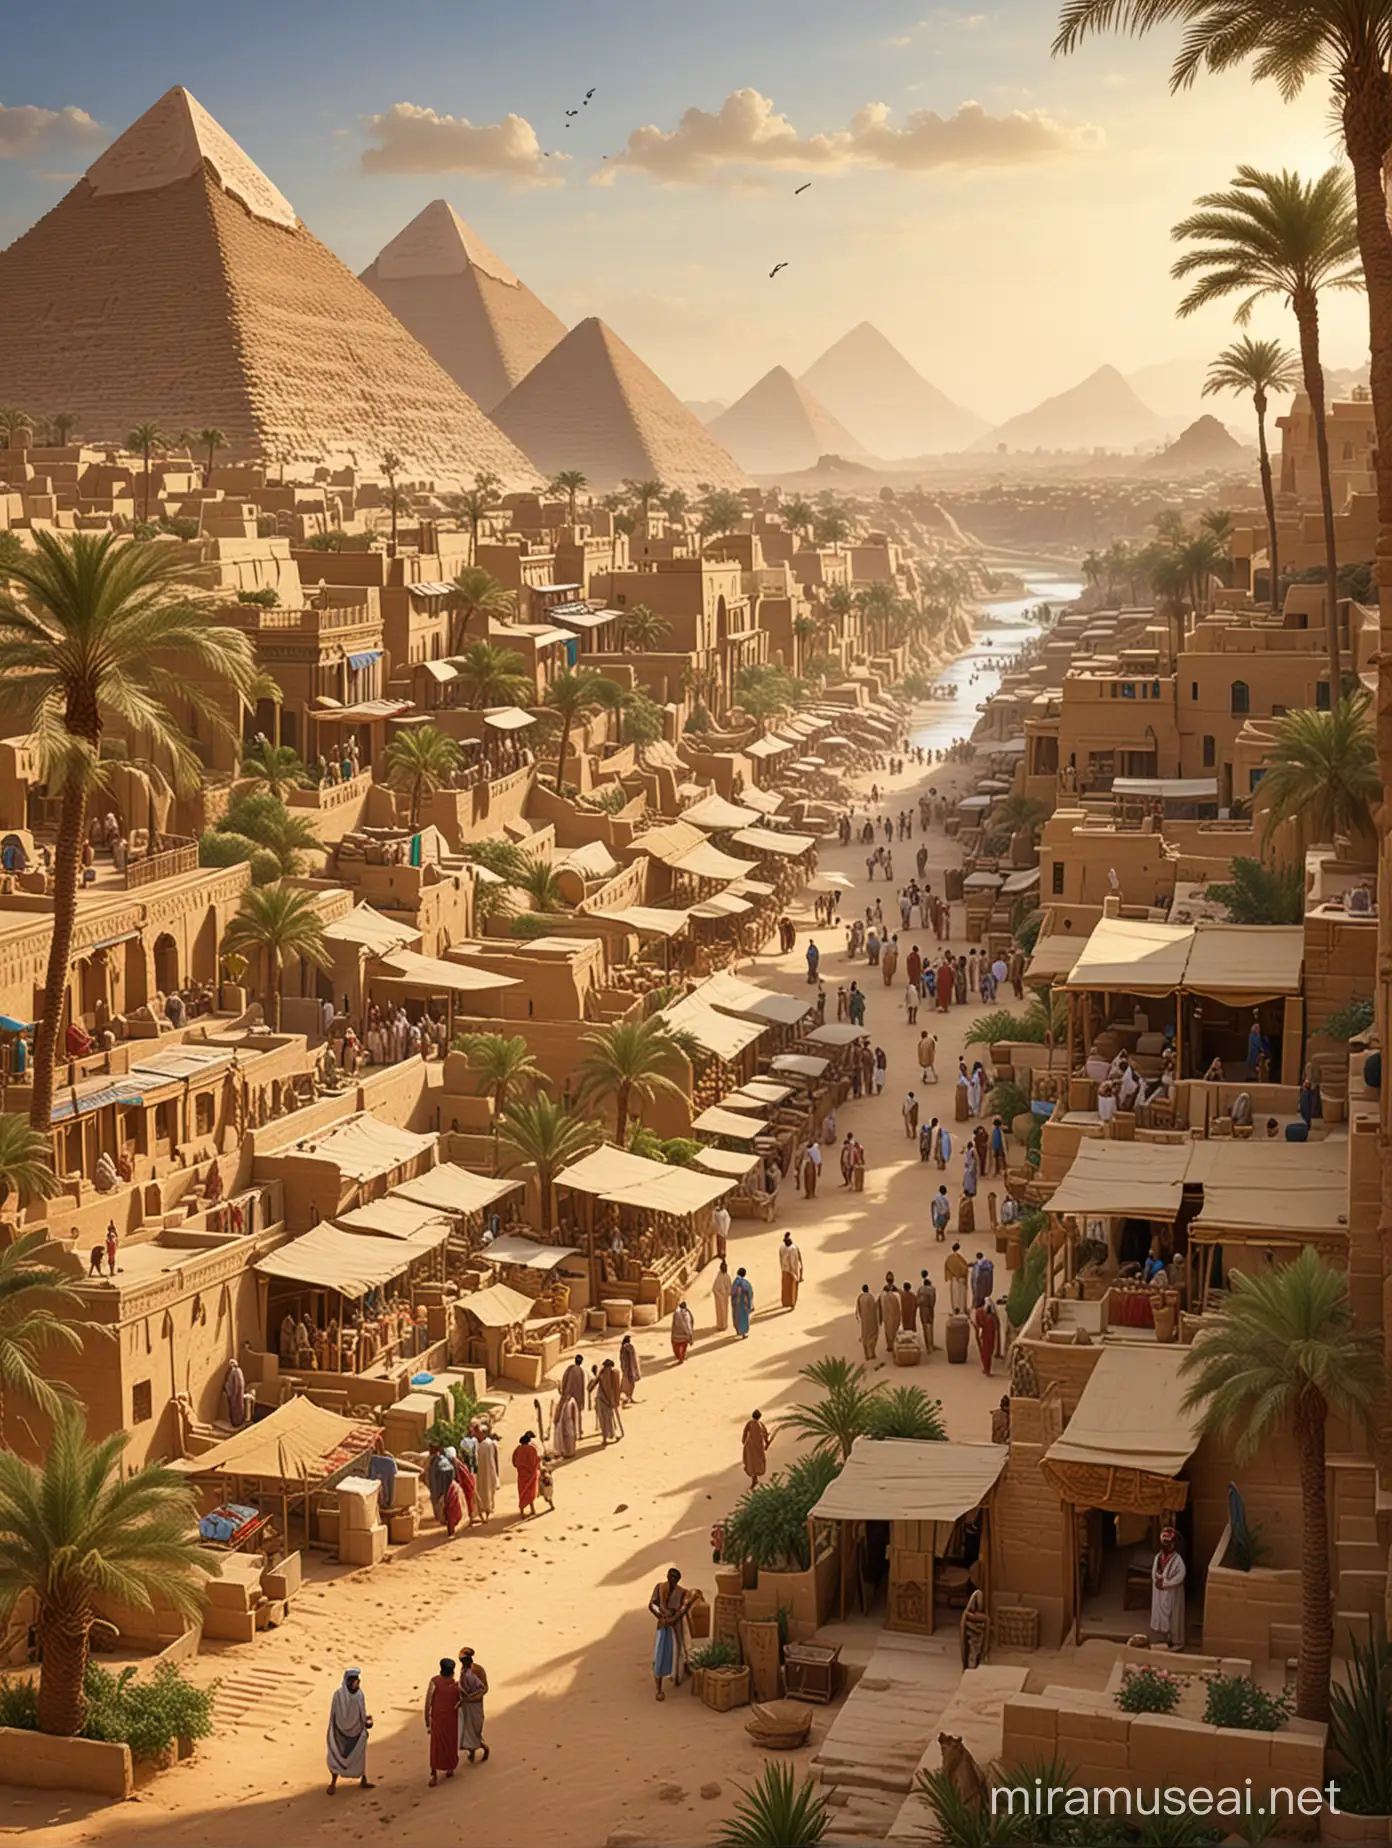 Ancient Egyptian Civilization Life Along the Nile and Pyramid Grandeur